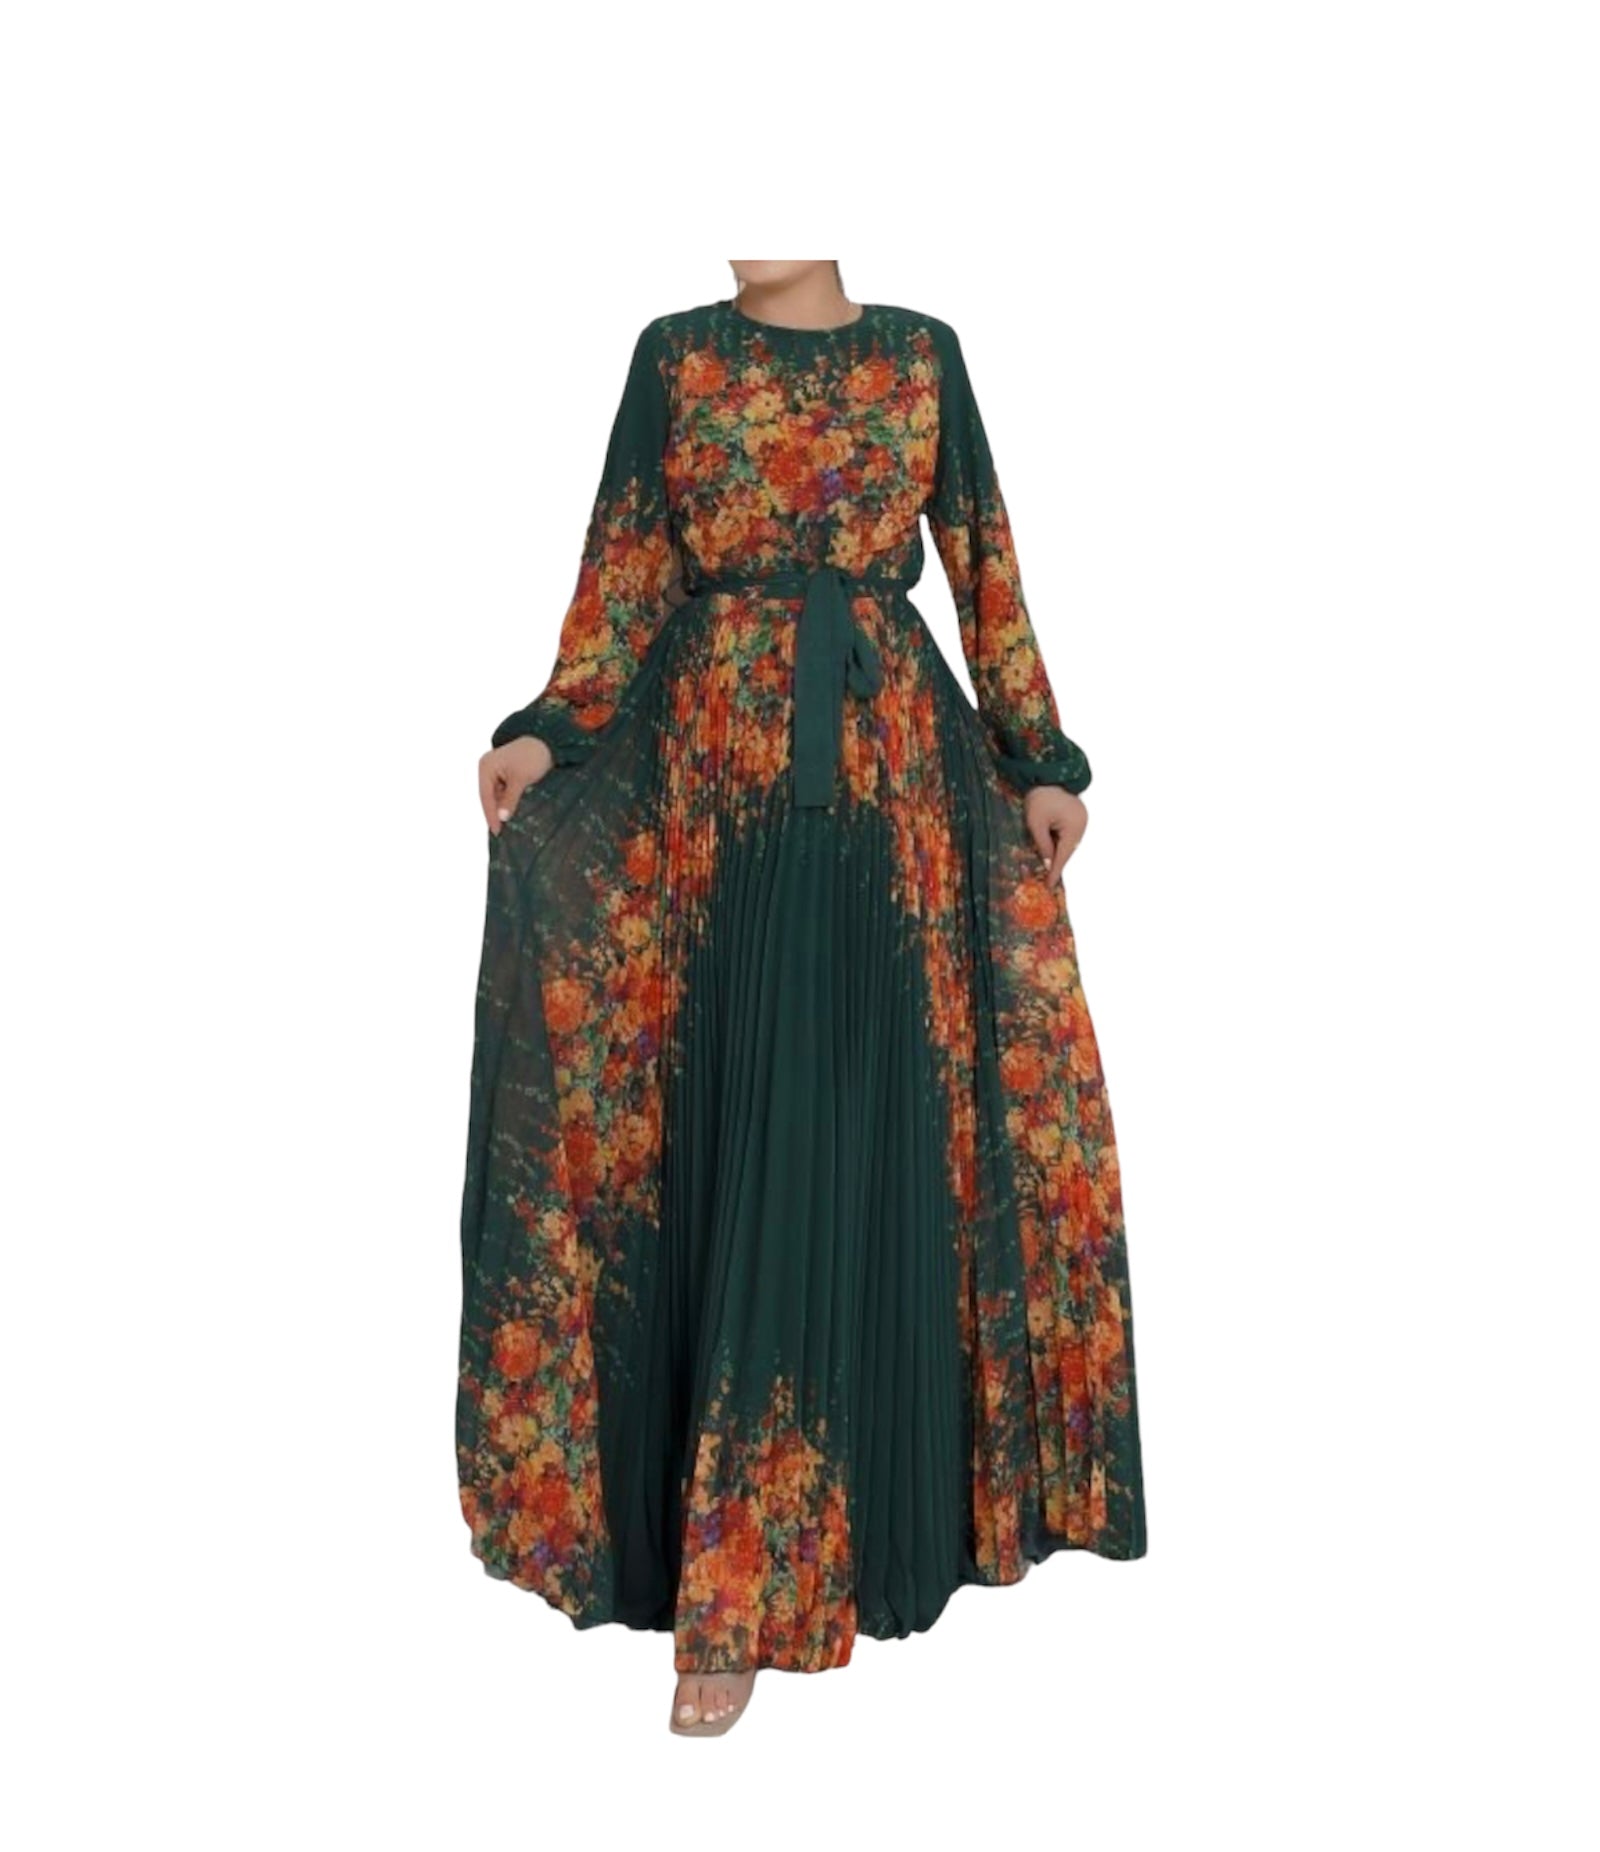 Floral Maxi Dress, Feminine, Modest Fashion